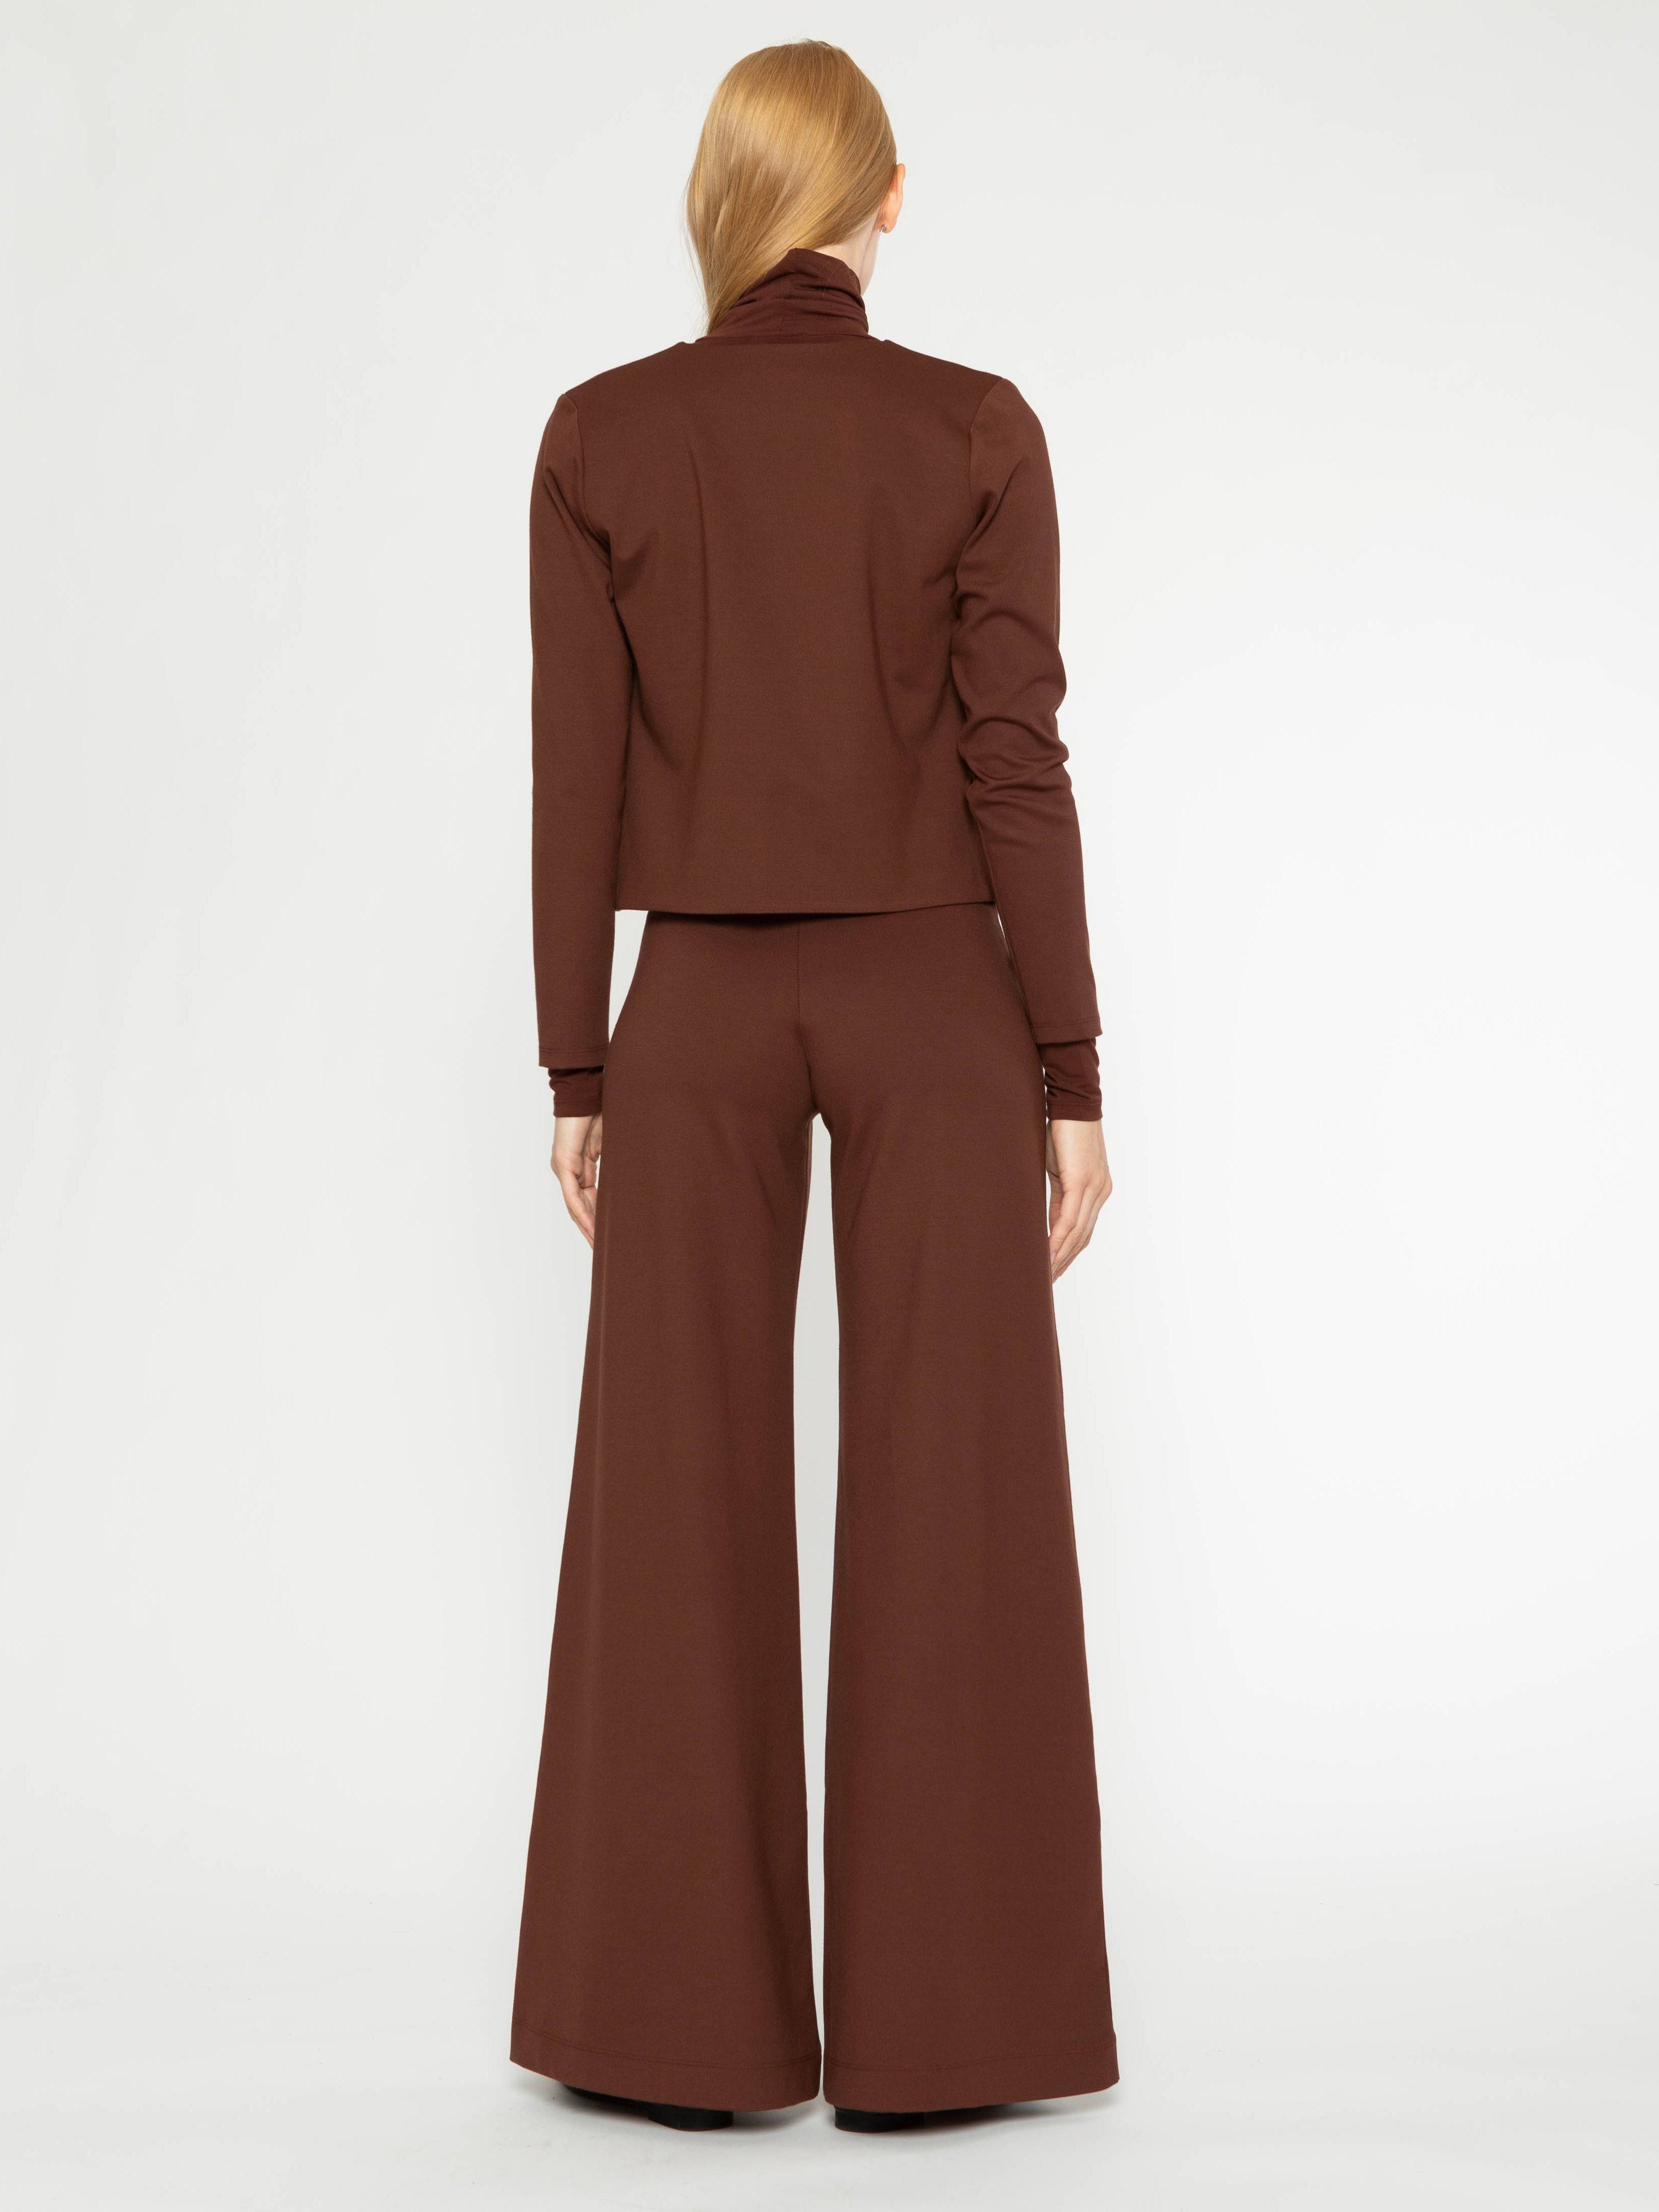 Bardot | Leia Low Rise Trouser in Chocolate| FashionPass